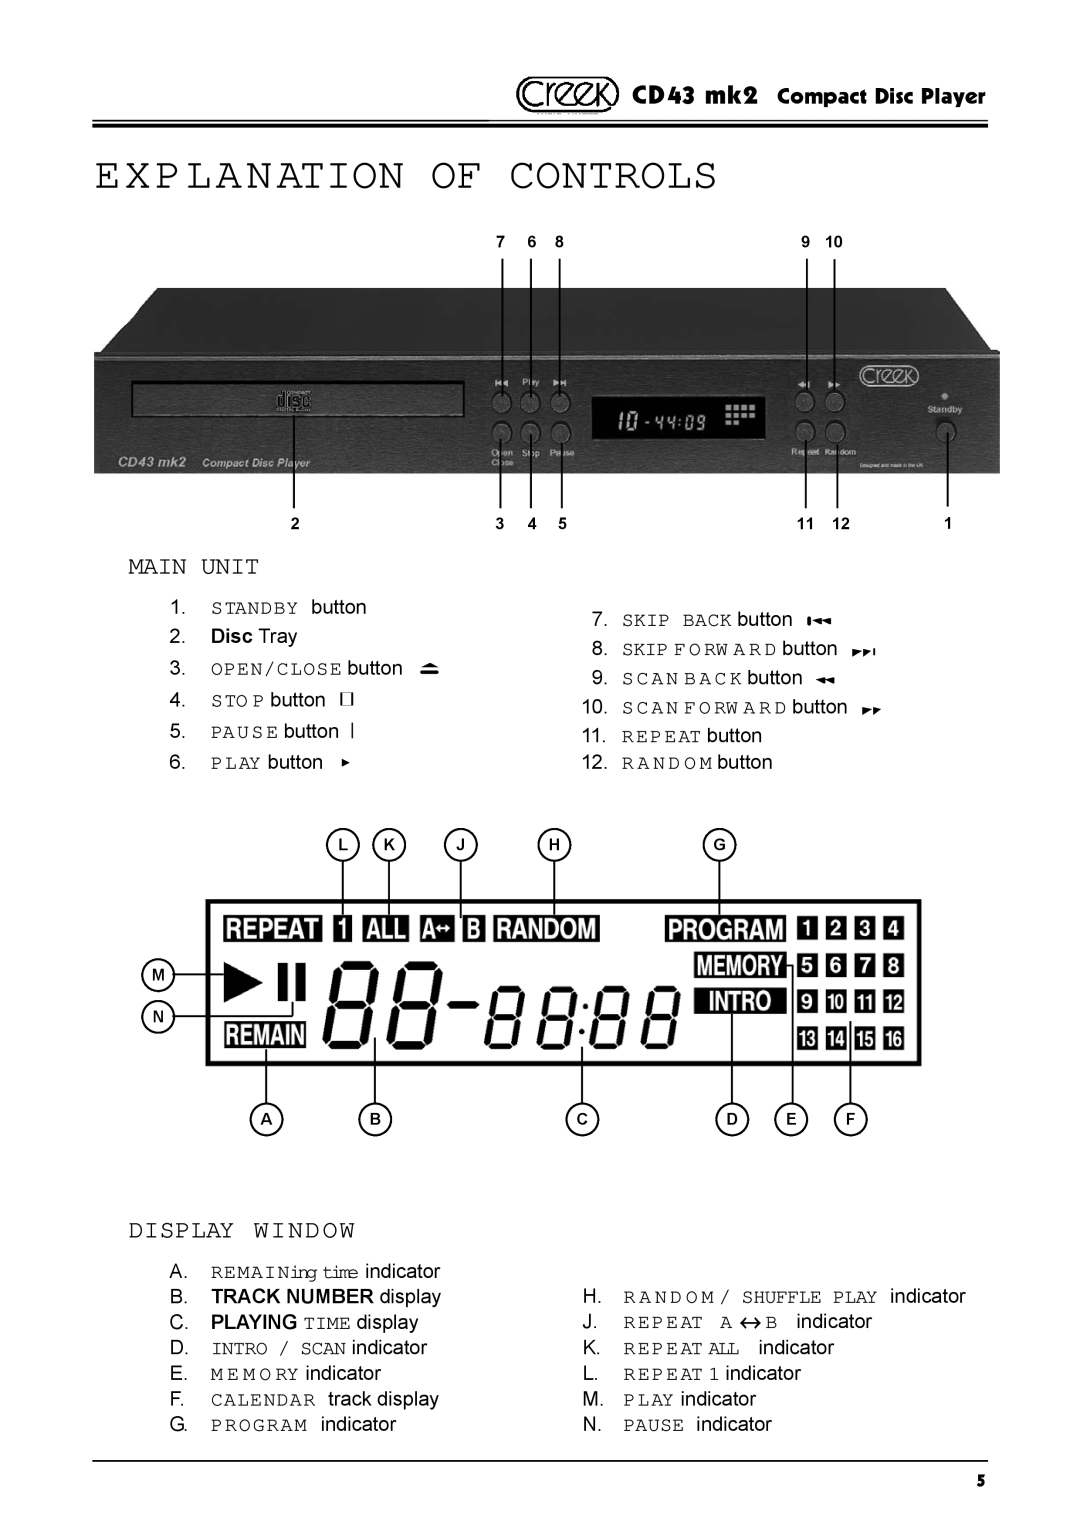 Creek Audio CD43 mk 2 manual Explanation Of Controls, Main Unit, Display Window, CD43 mk2 Compact Disc Player 